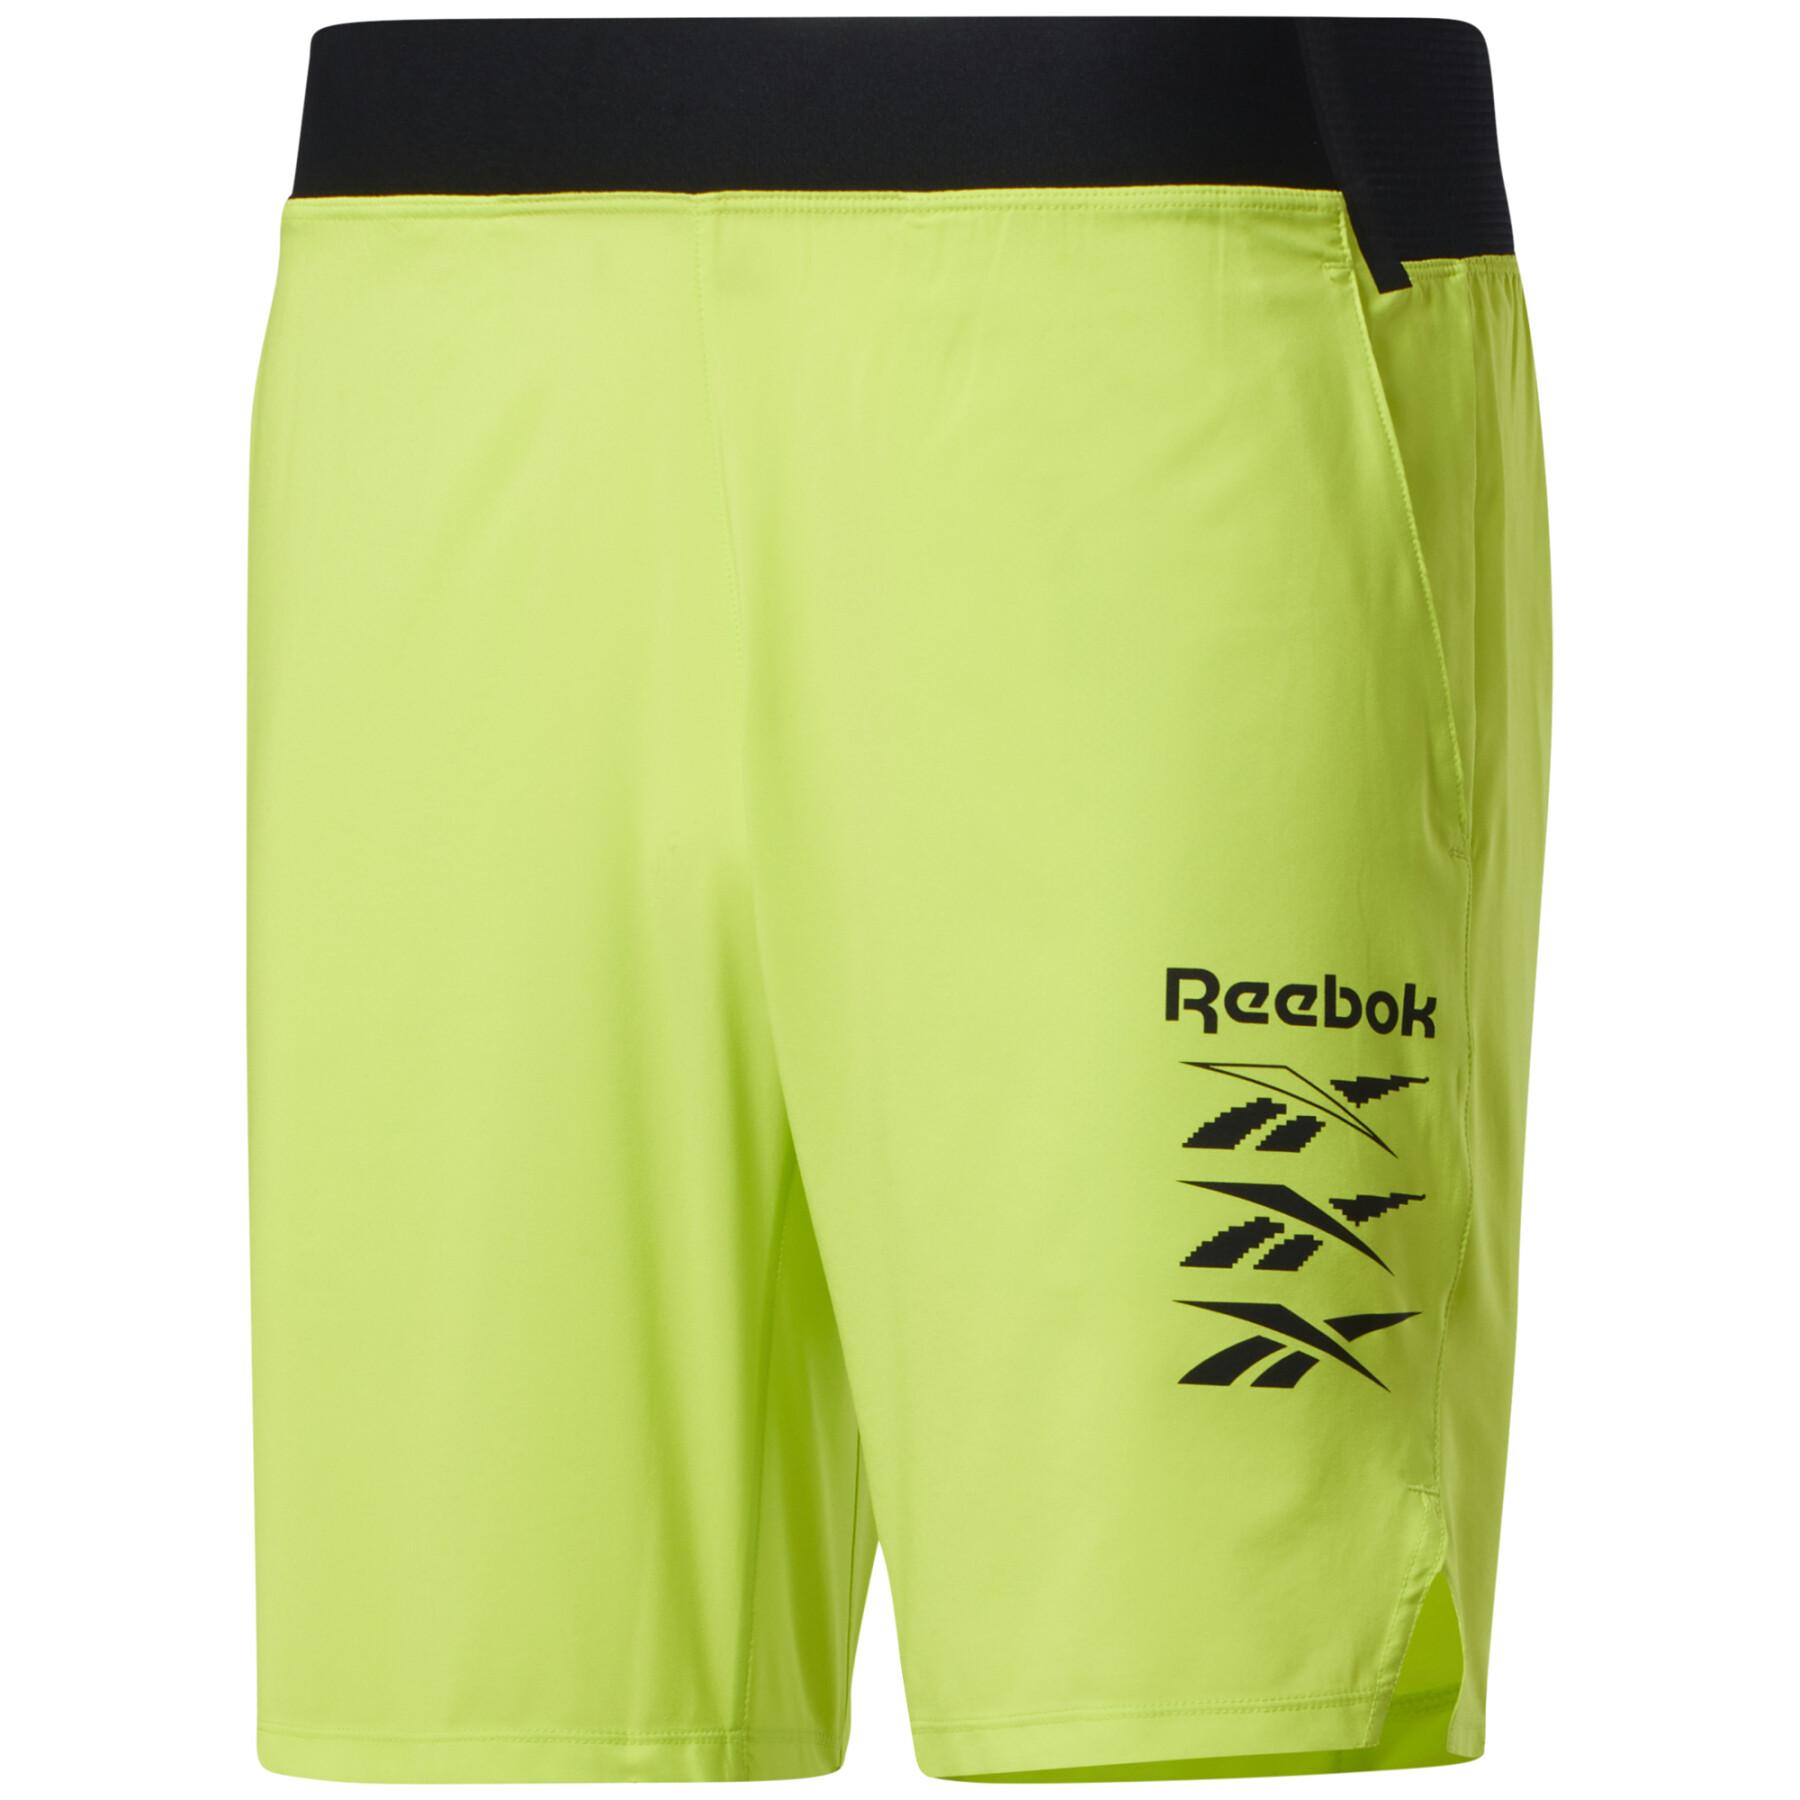 Lightweight shorts Reebok graphique Epic